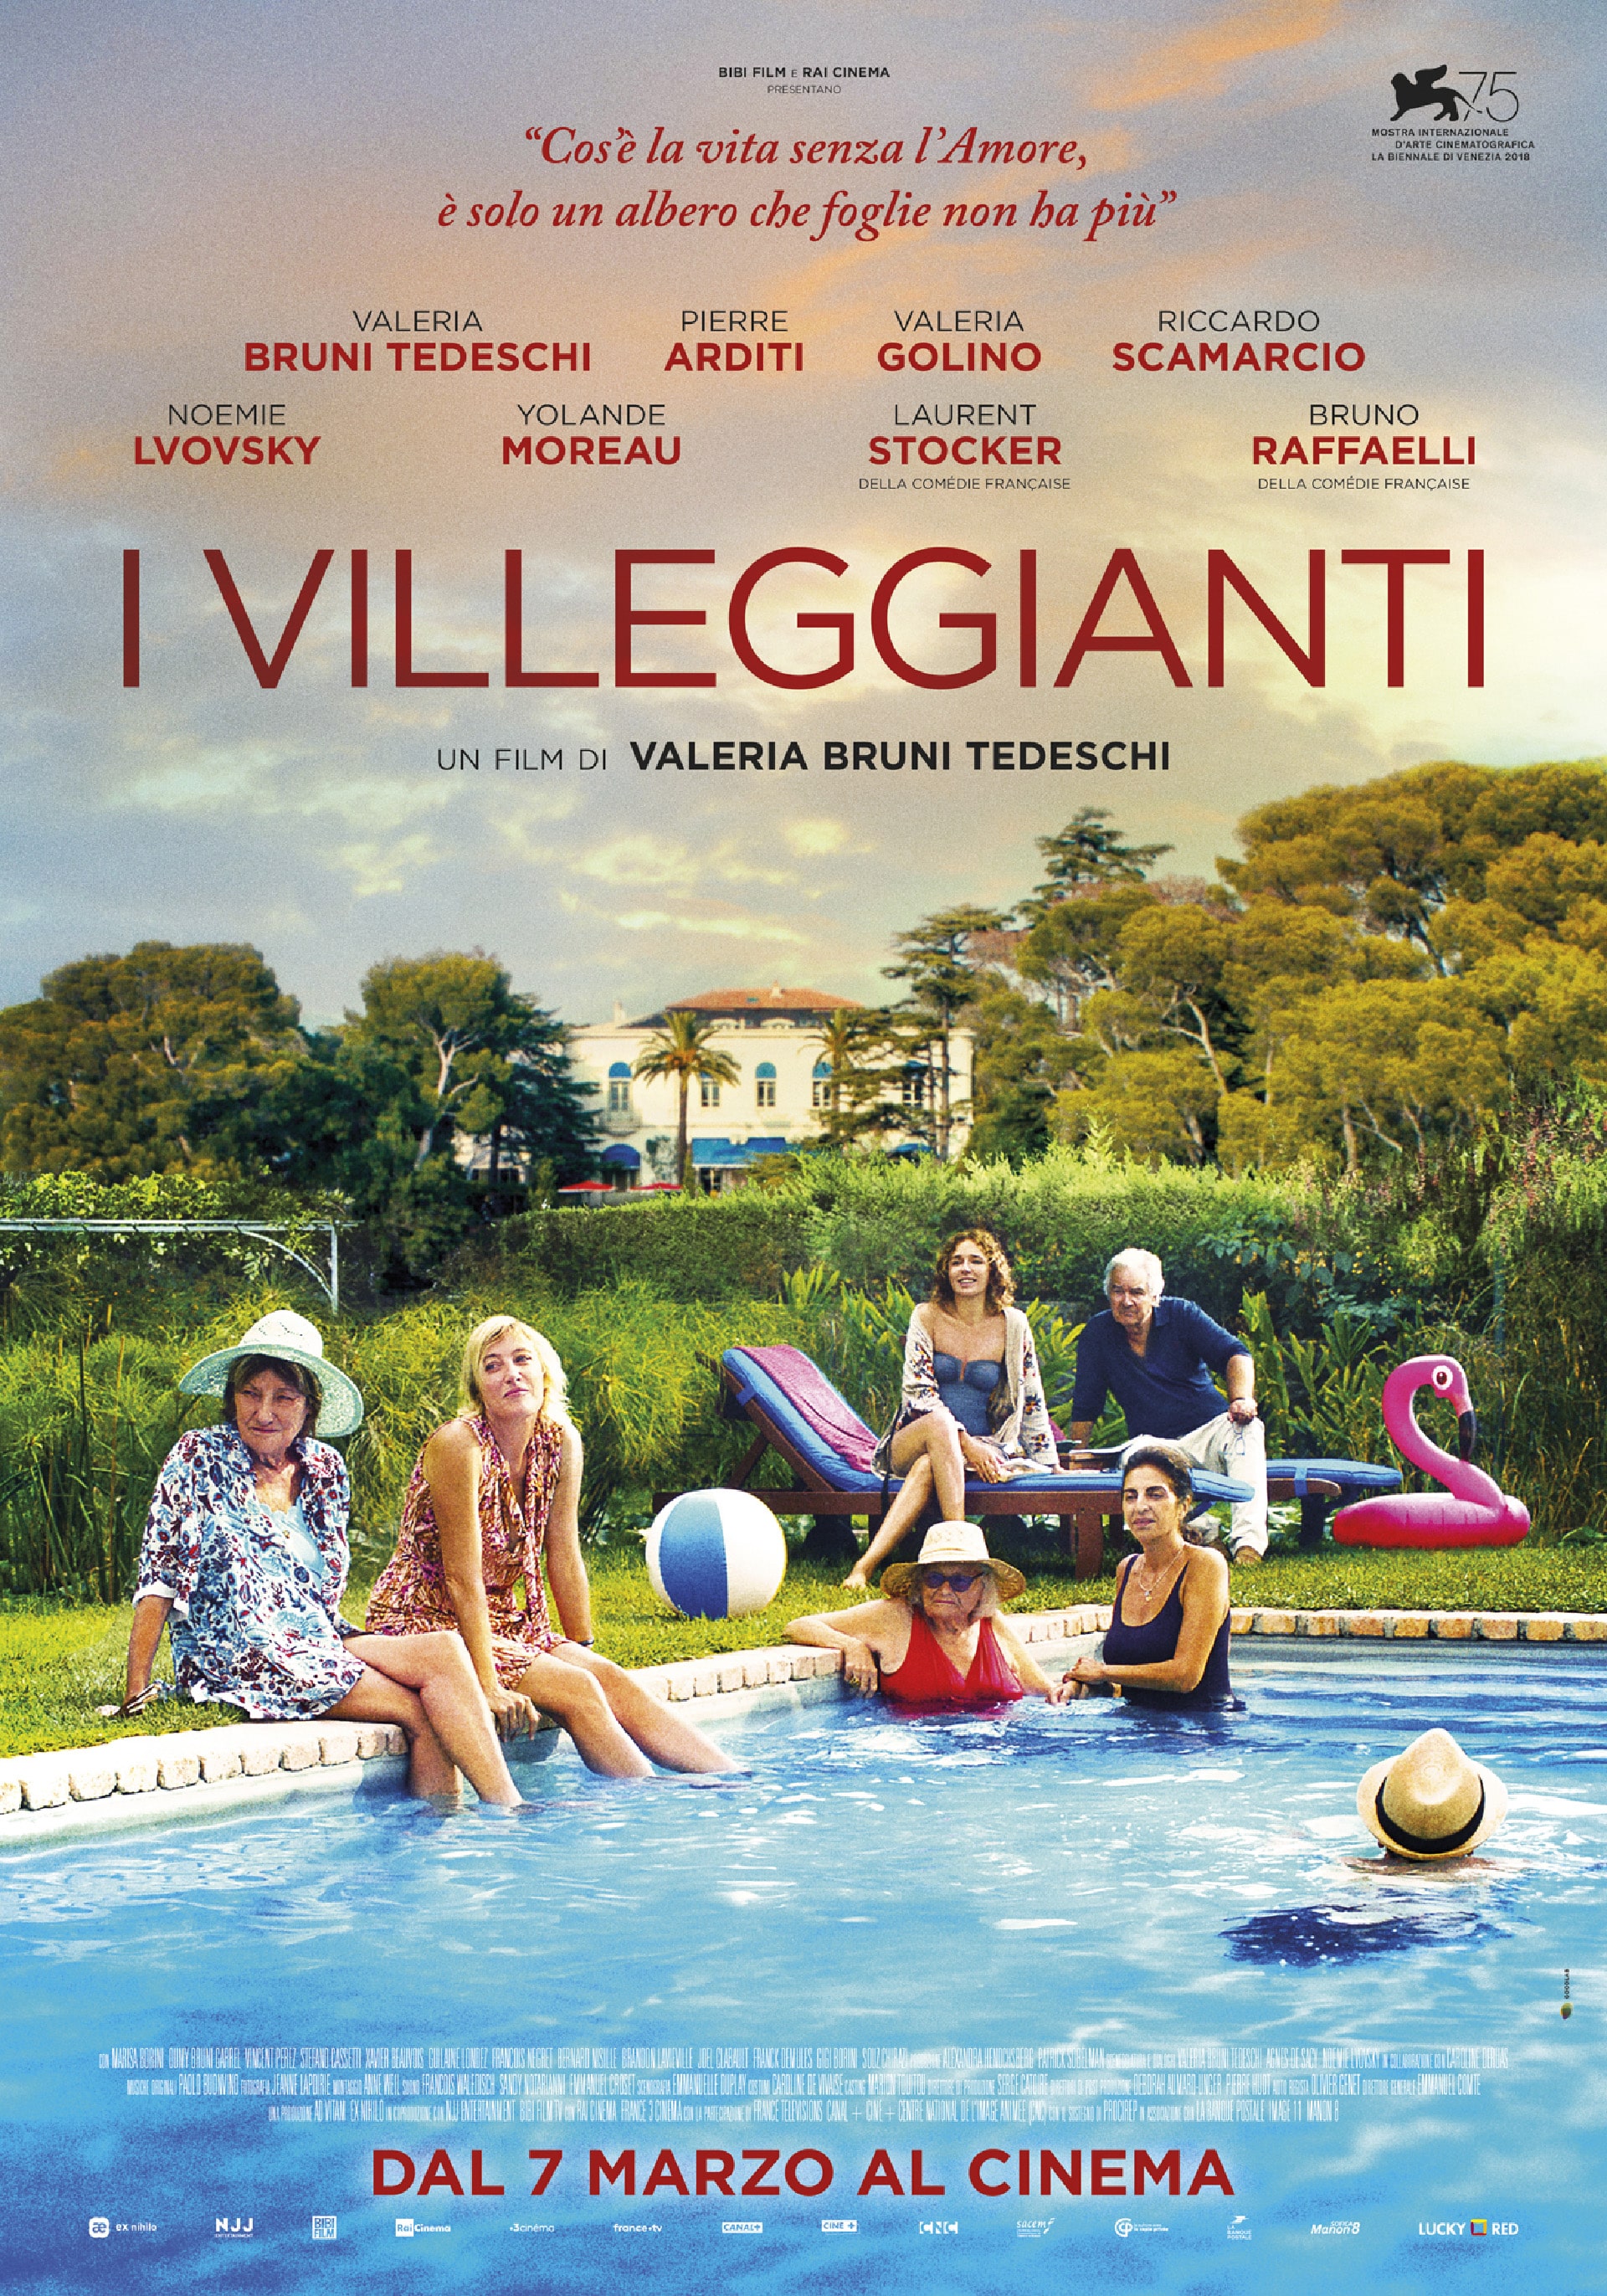 I Villeggianti cinematographe.it